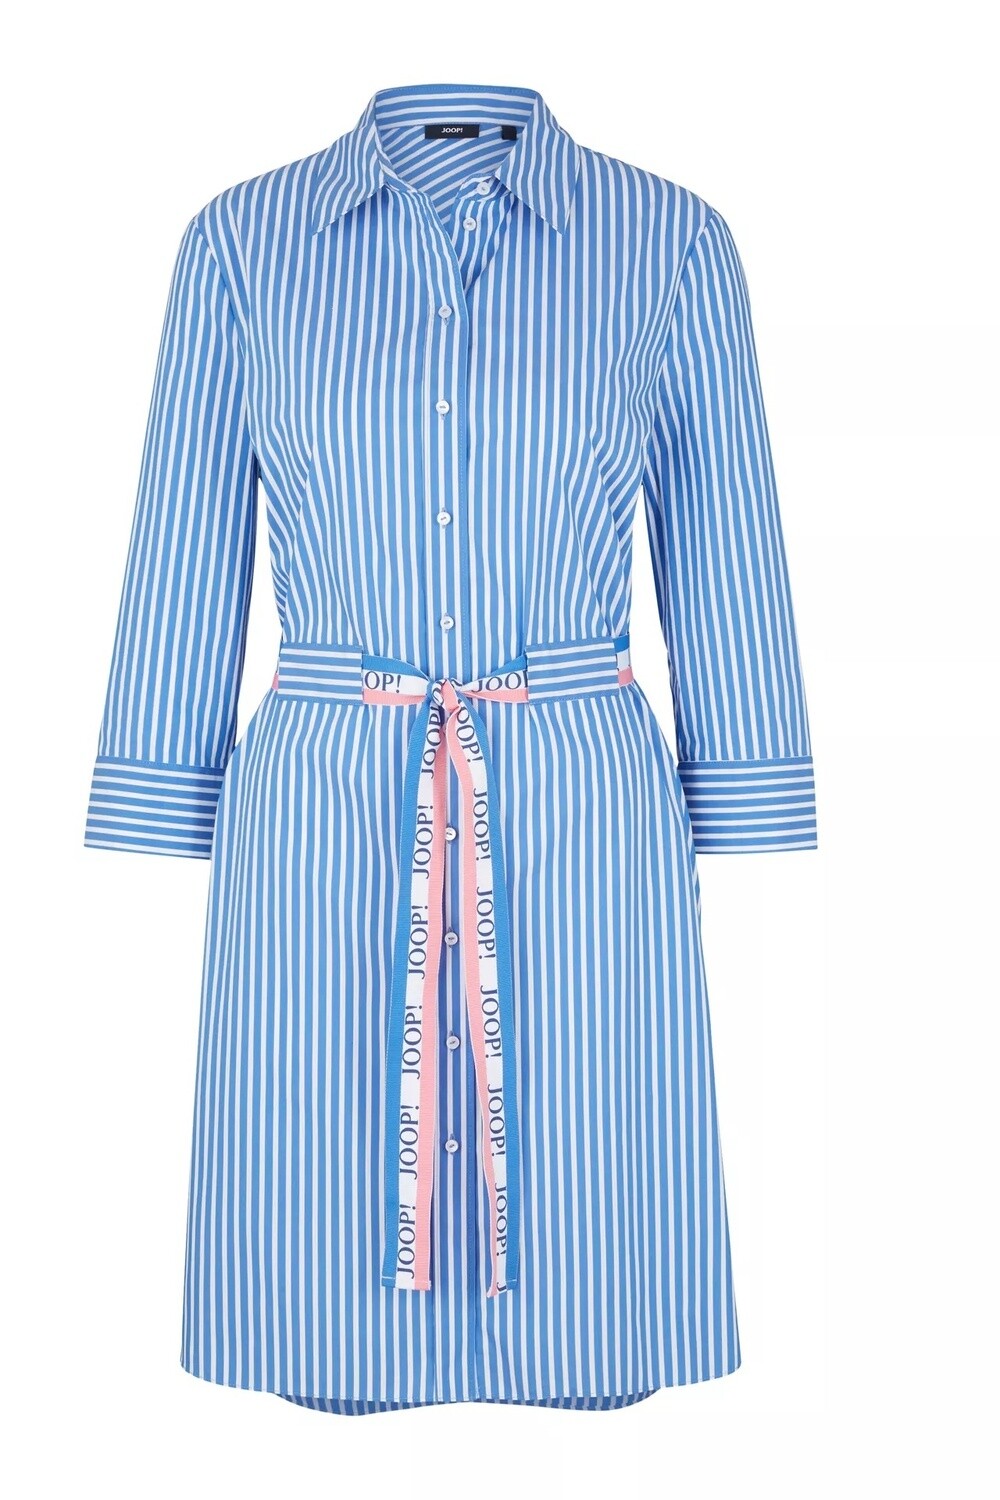 Joop Striped Dress Medium Blue